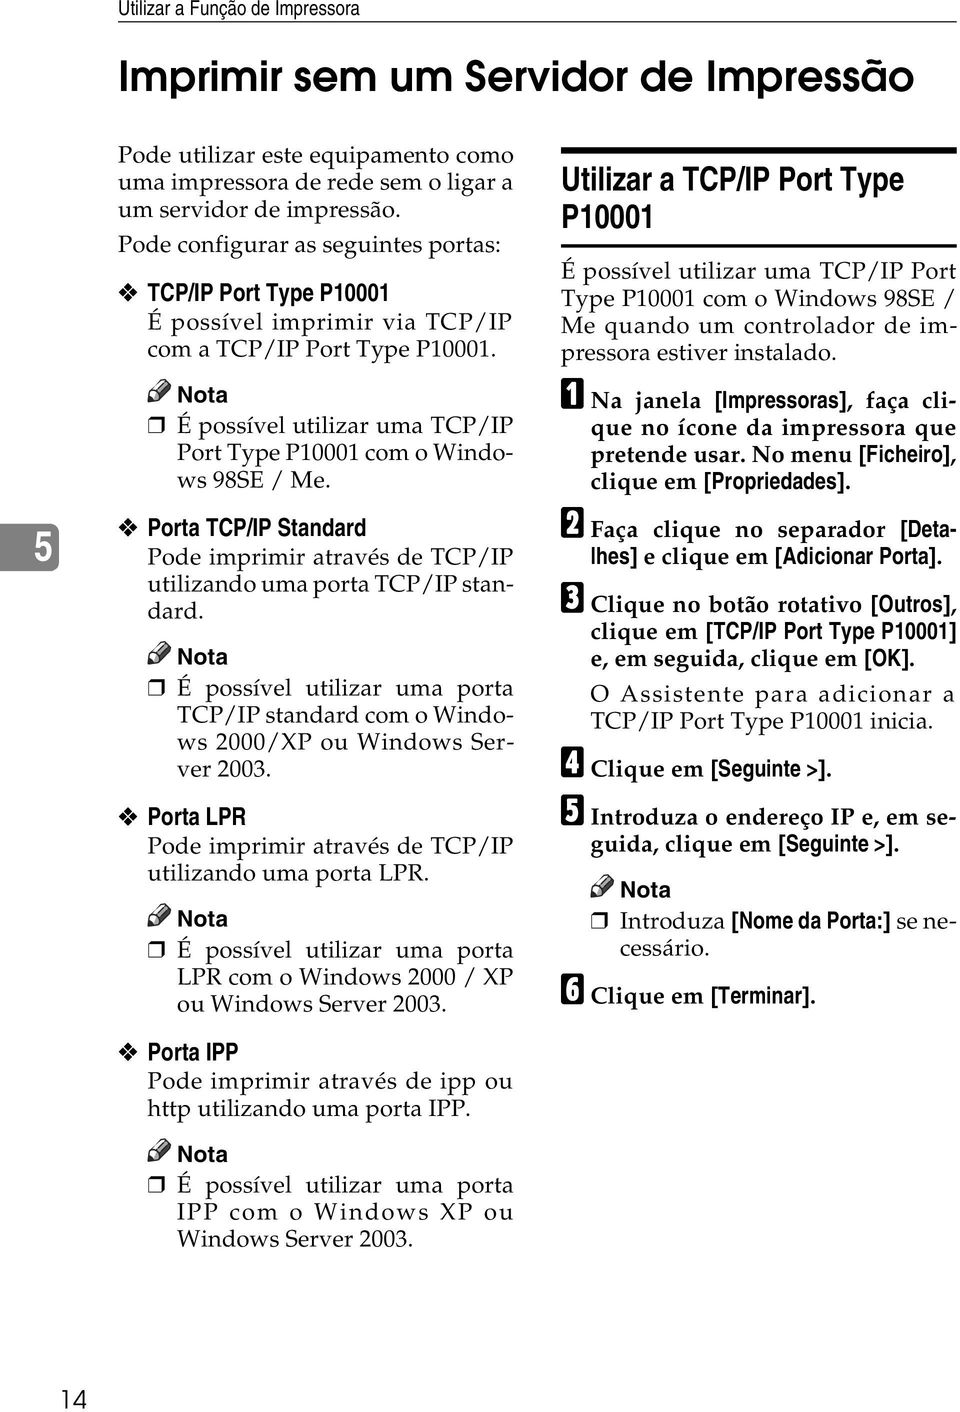 Porta TCP/IP Standard Pode imprimir através de TCP/IP utilizando uma porta TCP/IP standard. É possível utilizar uma porta TCP/IP standard com o Windows 2000/XP ou Windows Server 2003.